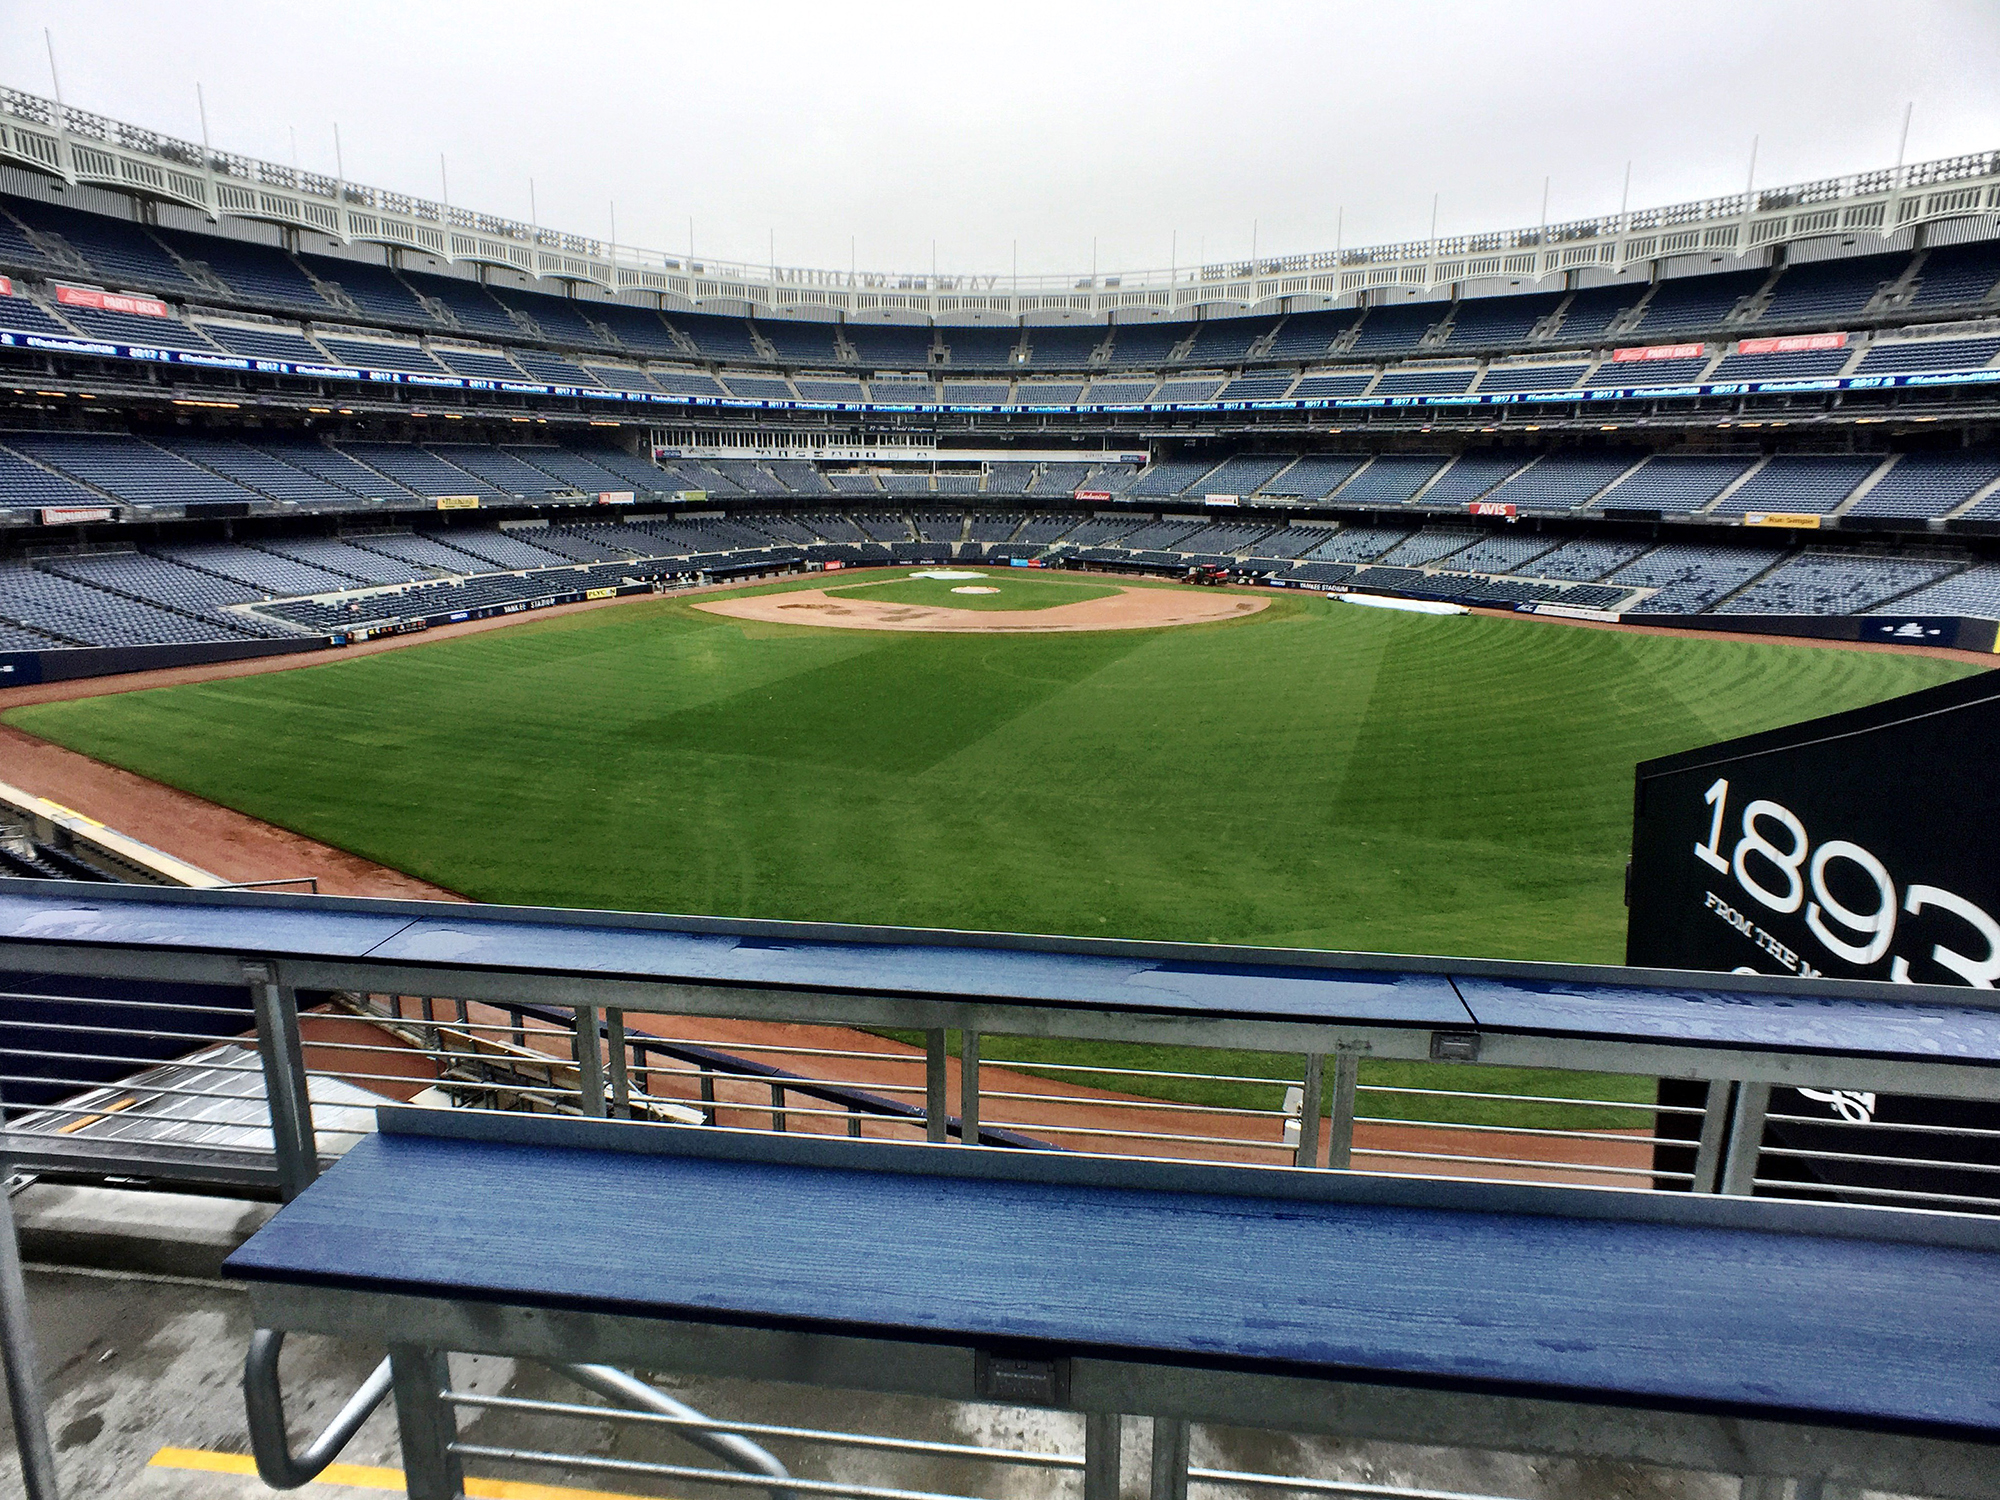 Brooklyn Digest: Yankee Stadium Has Many New Things To Enjoy This Season